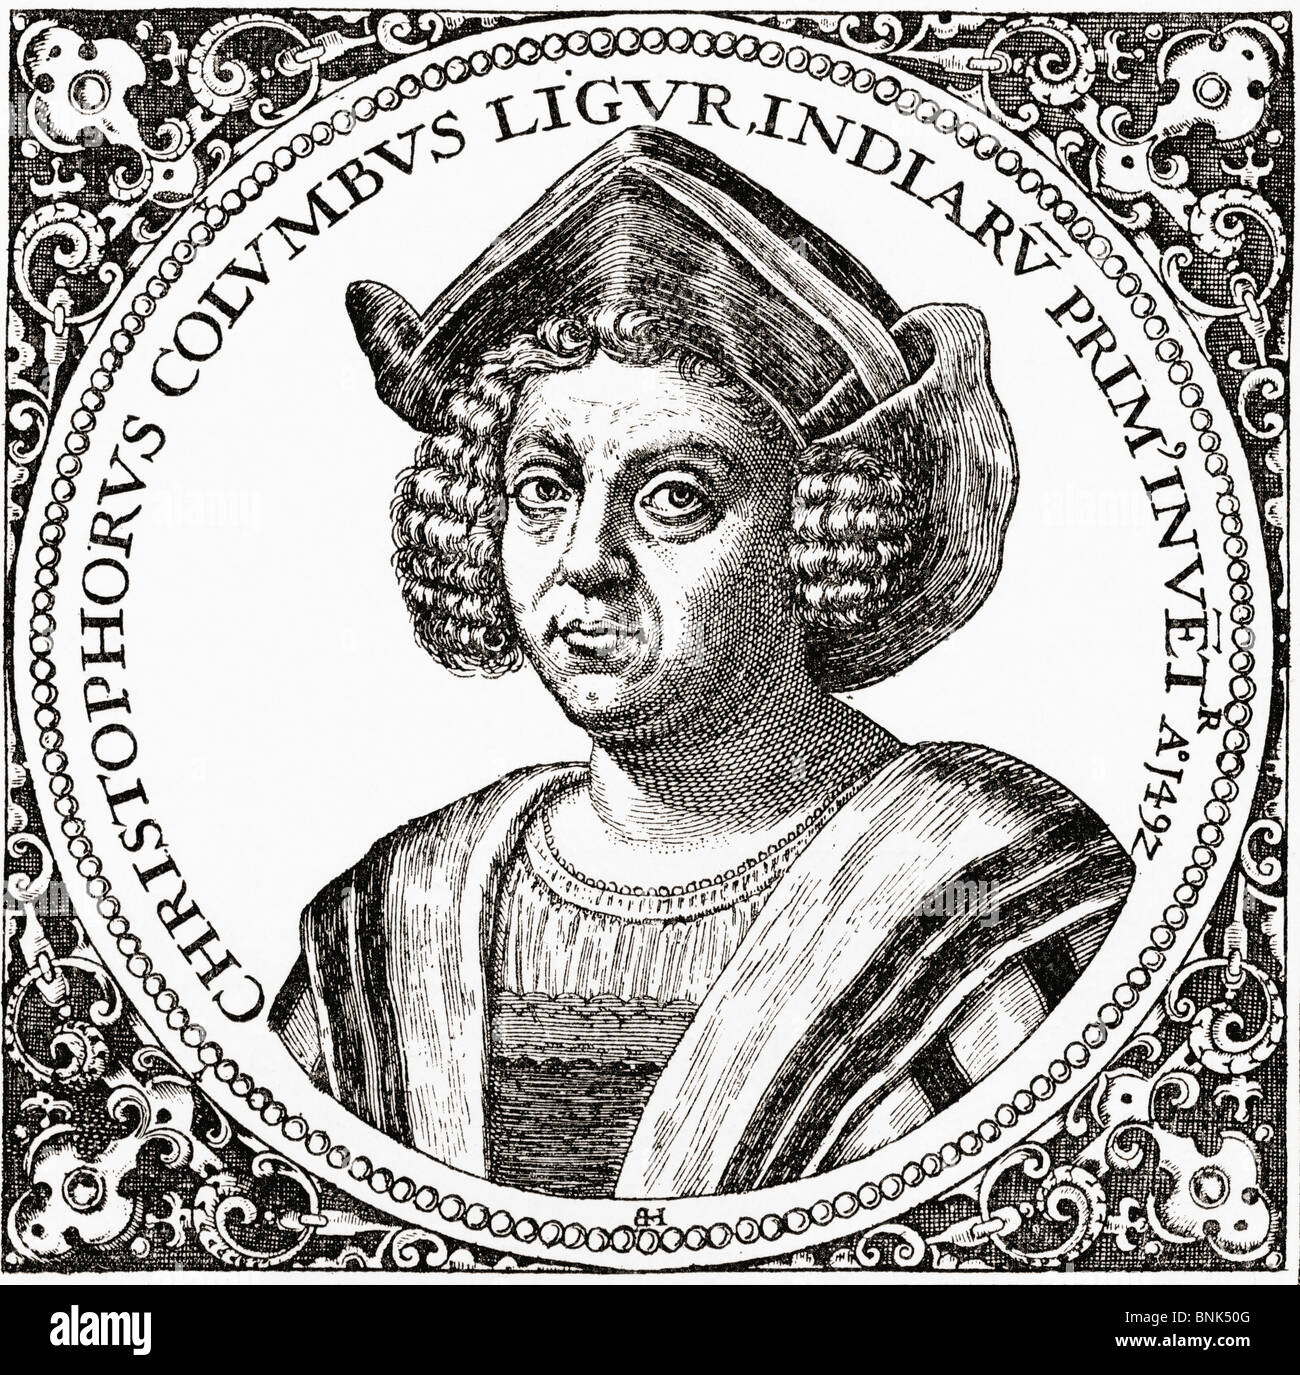 Christopher Columbus, c. 1451 to 1506. Genovese navigator, colonizer, and explorer. Stock Photo